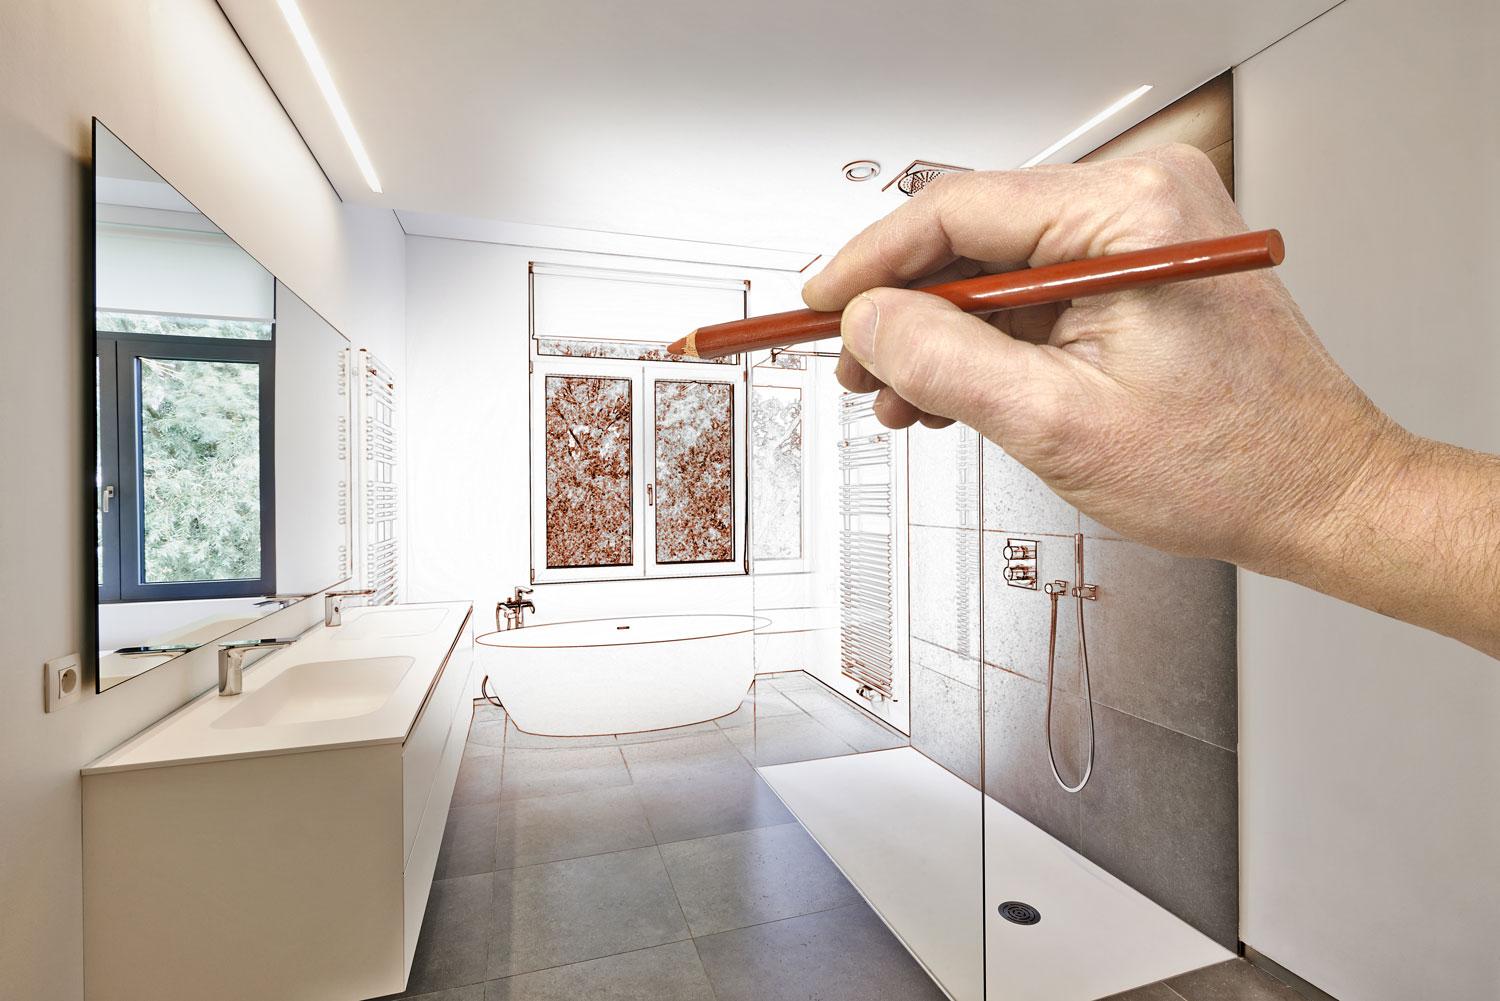 A person sketching a bathroom remodel.